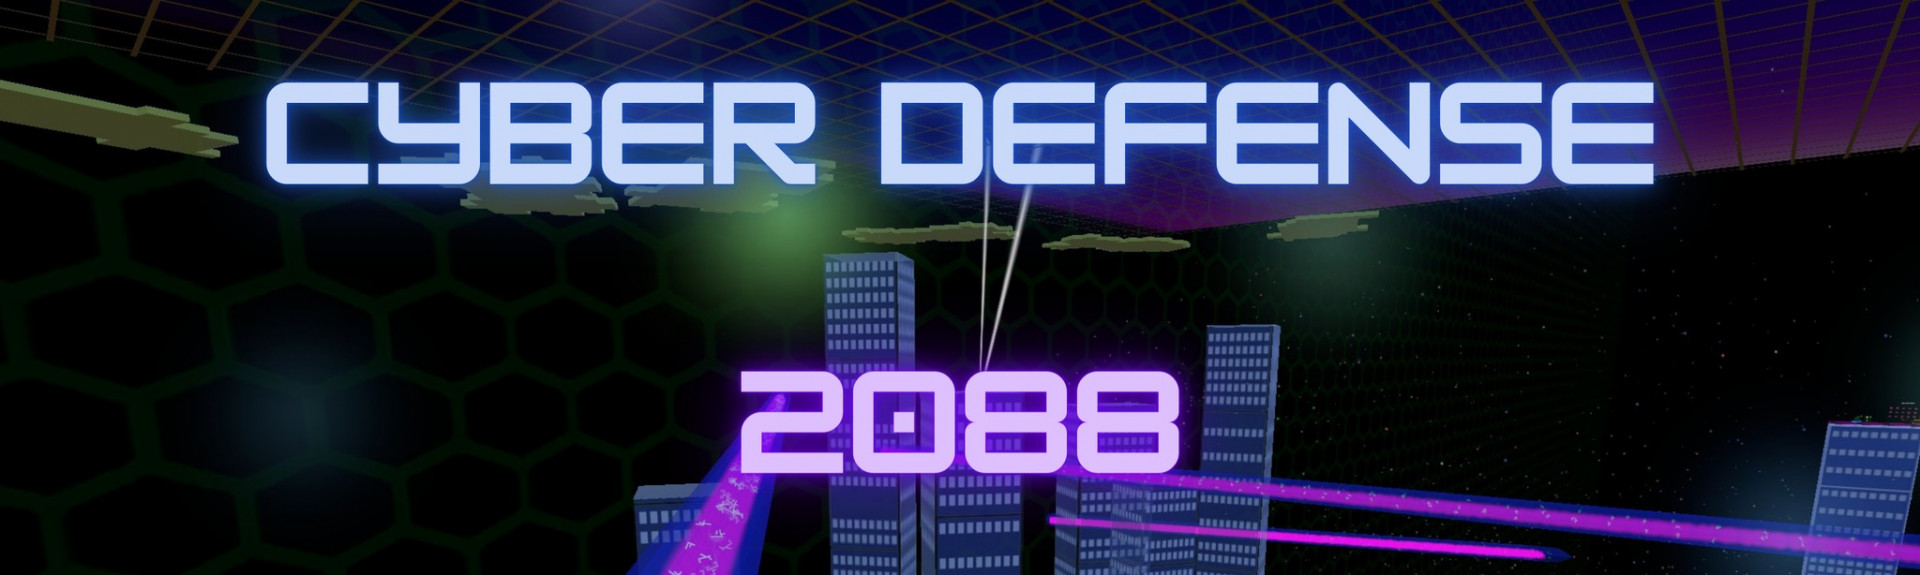 Cyber Defense 2088